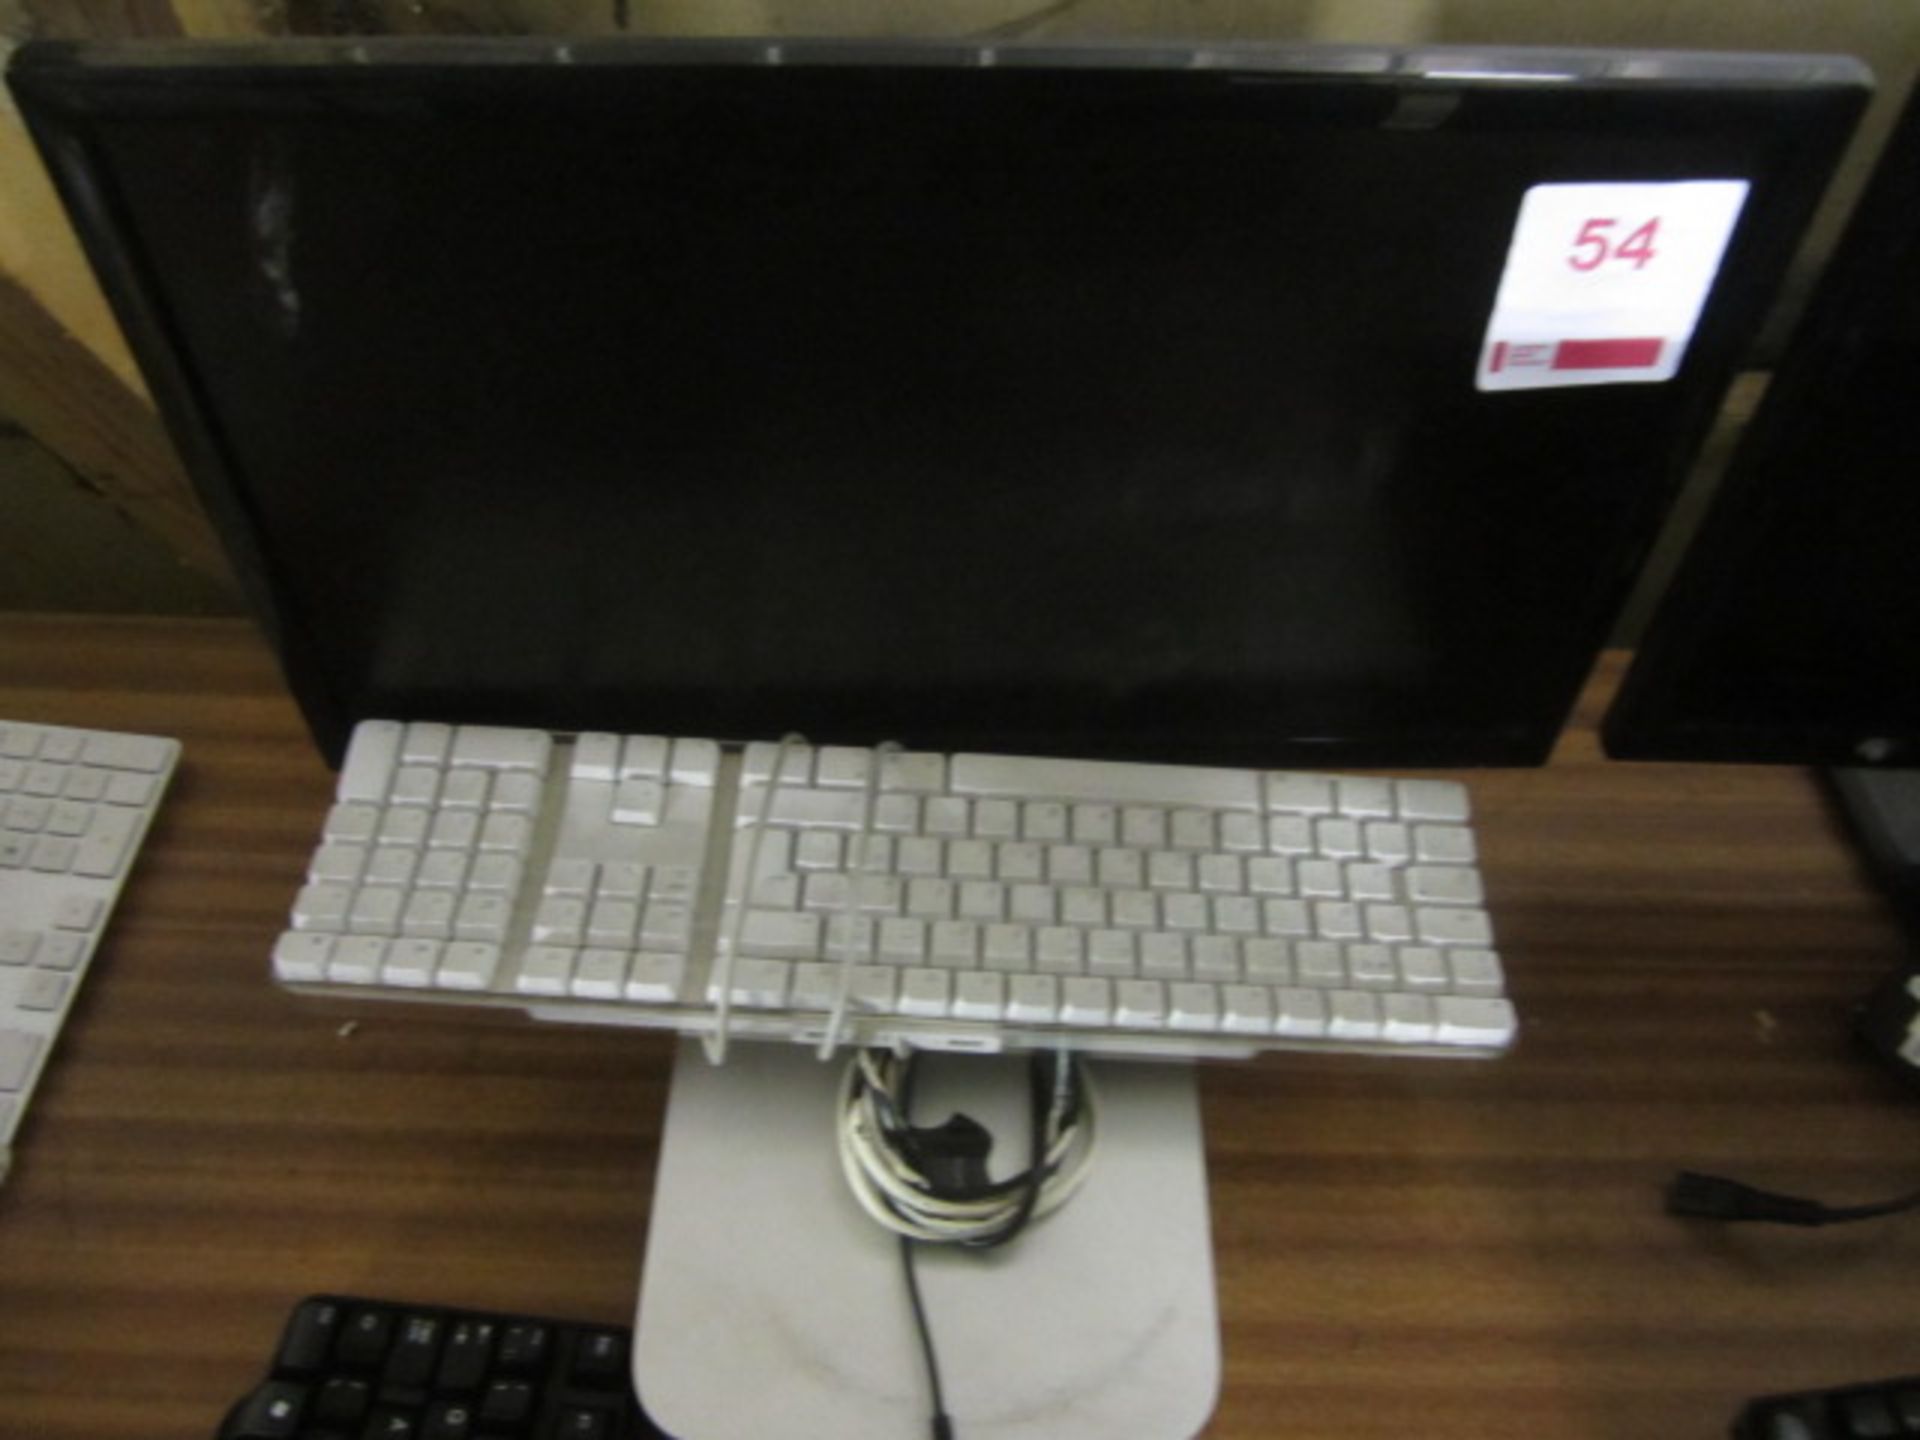 Apple Mac Mini desk top computer, TFT, keyboard, mouse